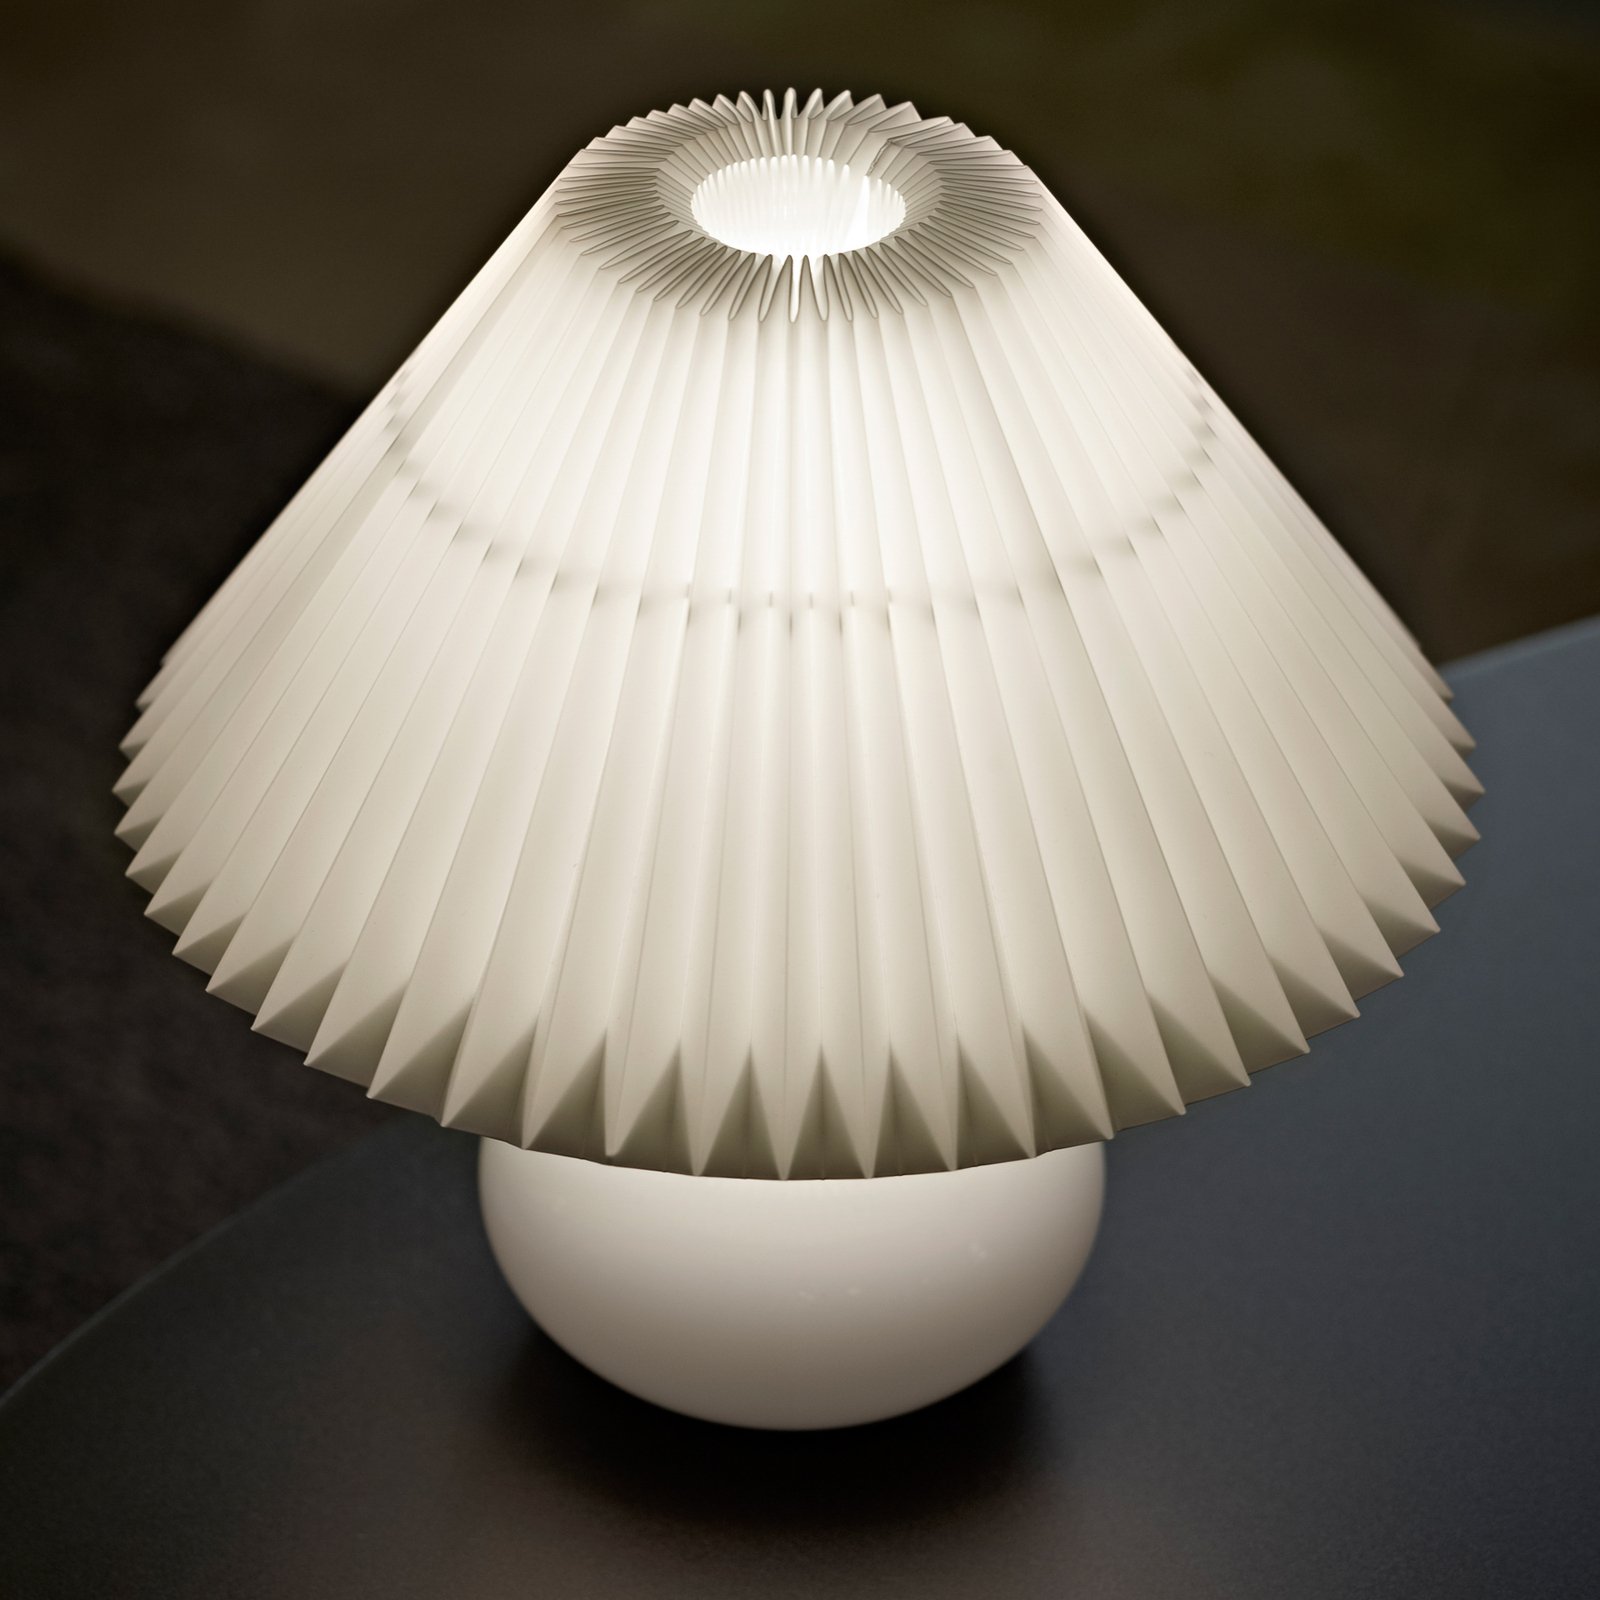 LE KLINT 314 table lamp, white/brass, height 27 cm